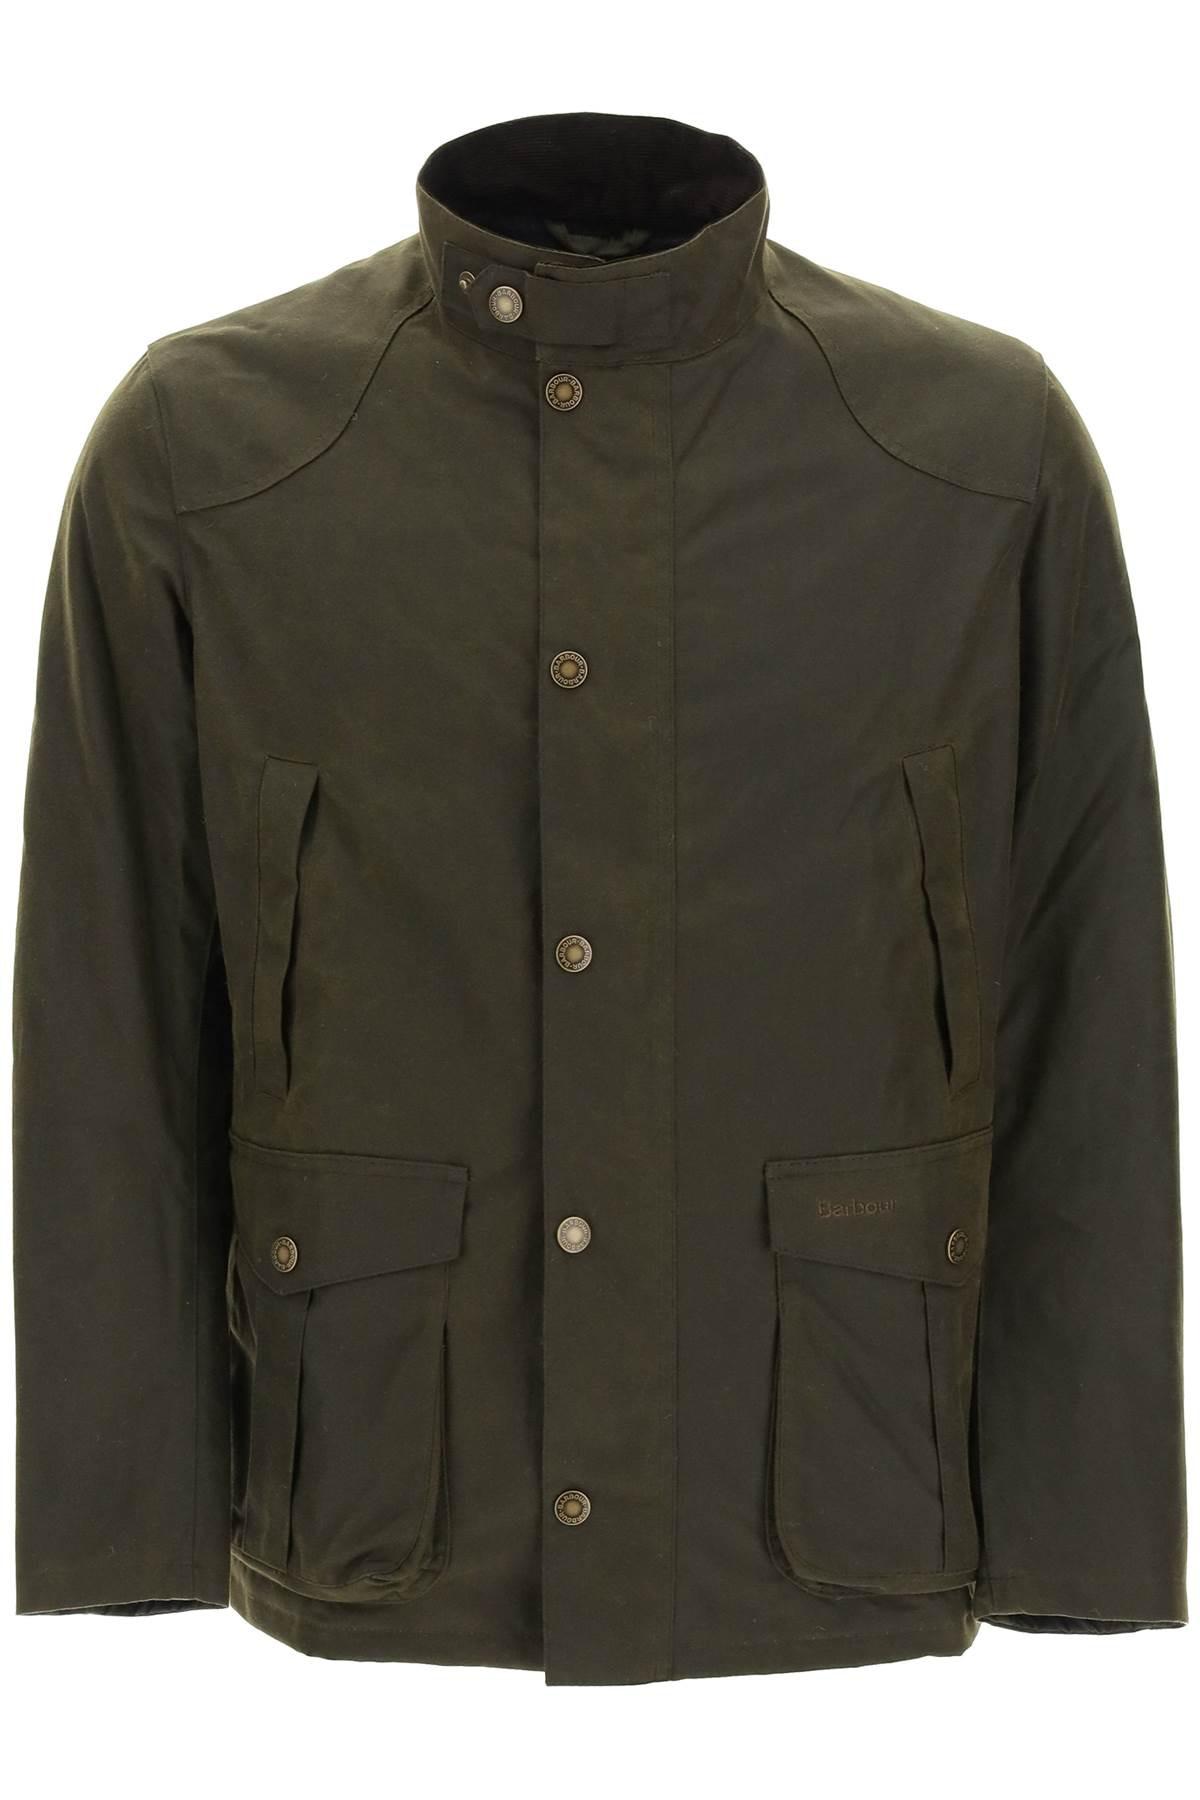 Barbour Leeward Jacket In Waxed Cotton in Green for Men | Lyst